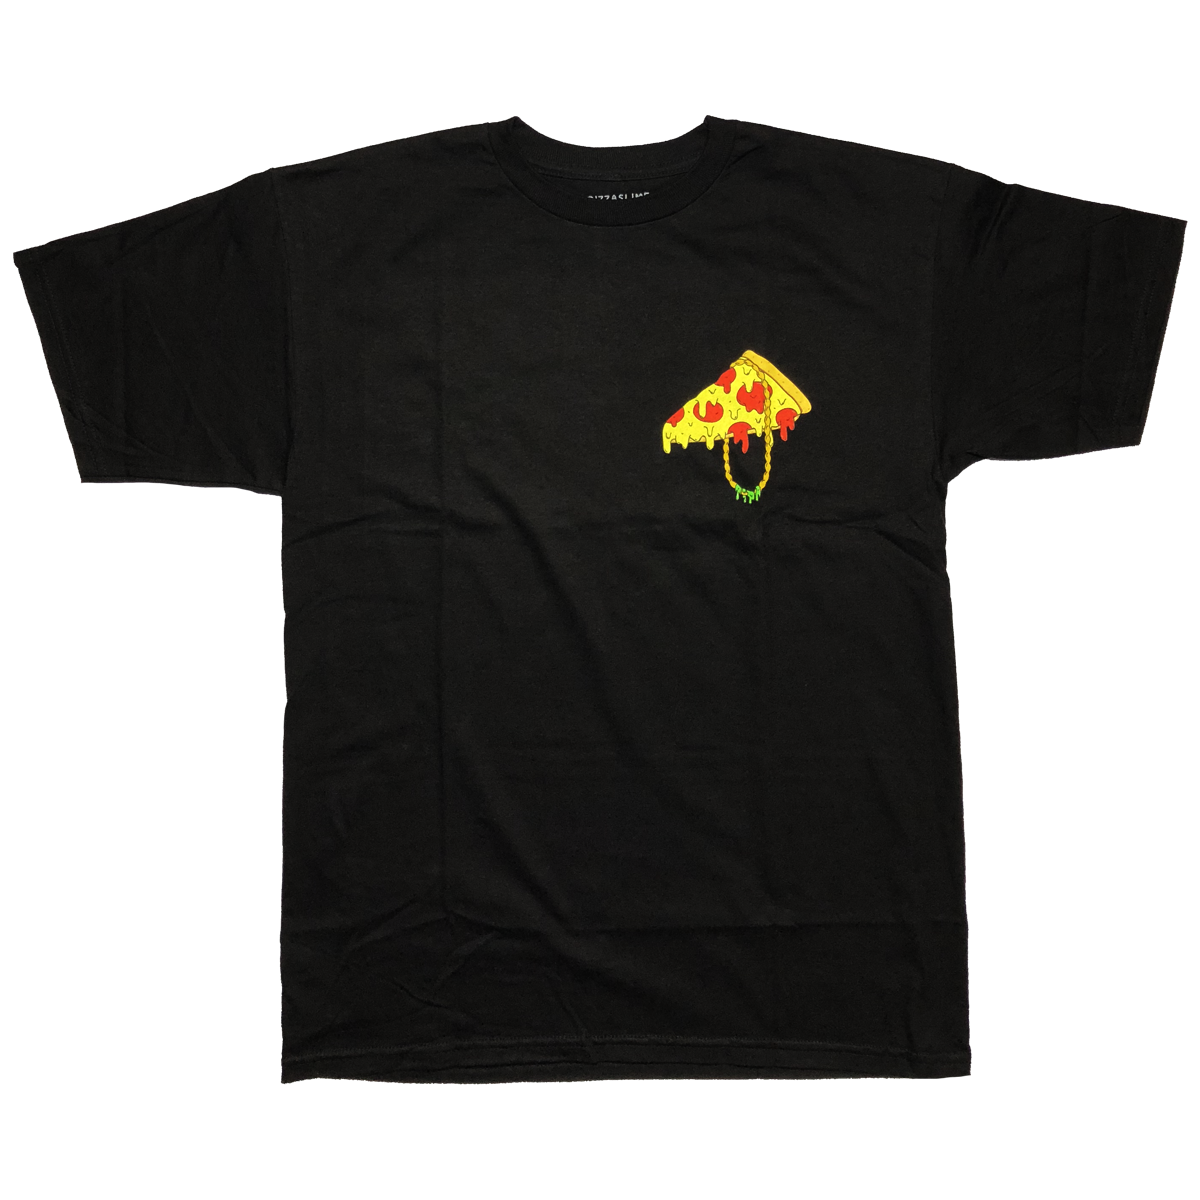 Pizzaslime Gang T-Shirt 1.2 (BLACK)